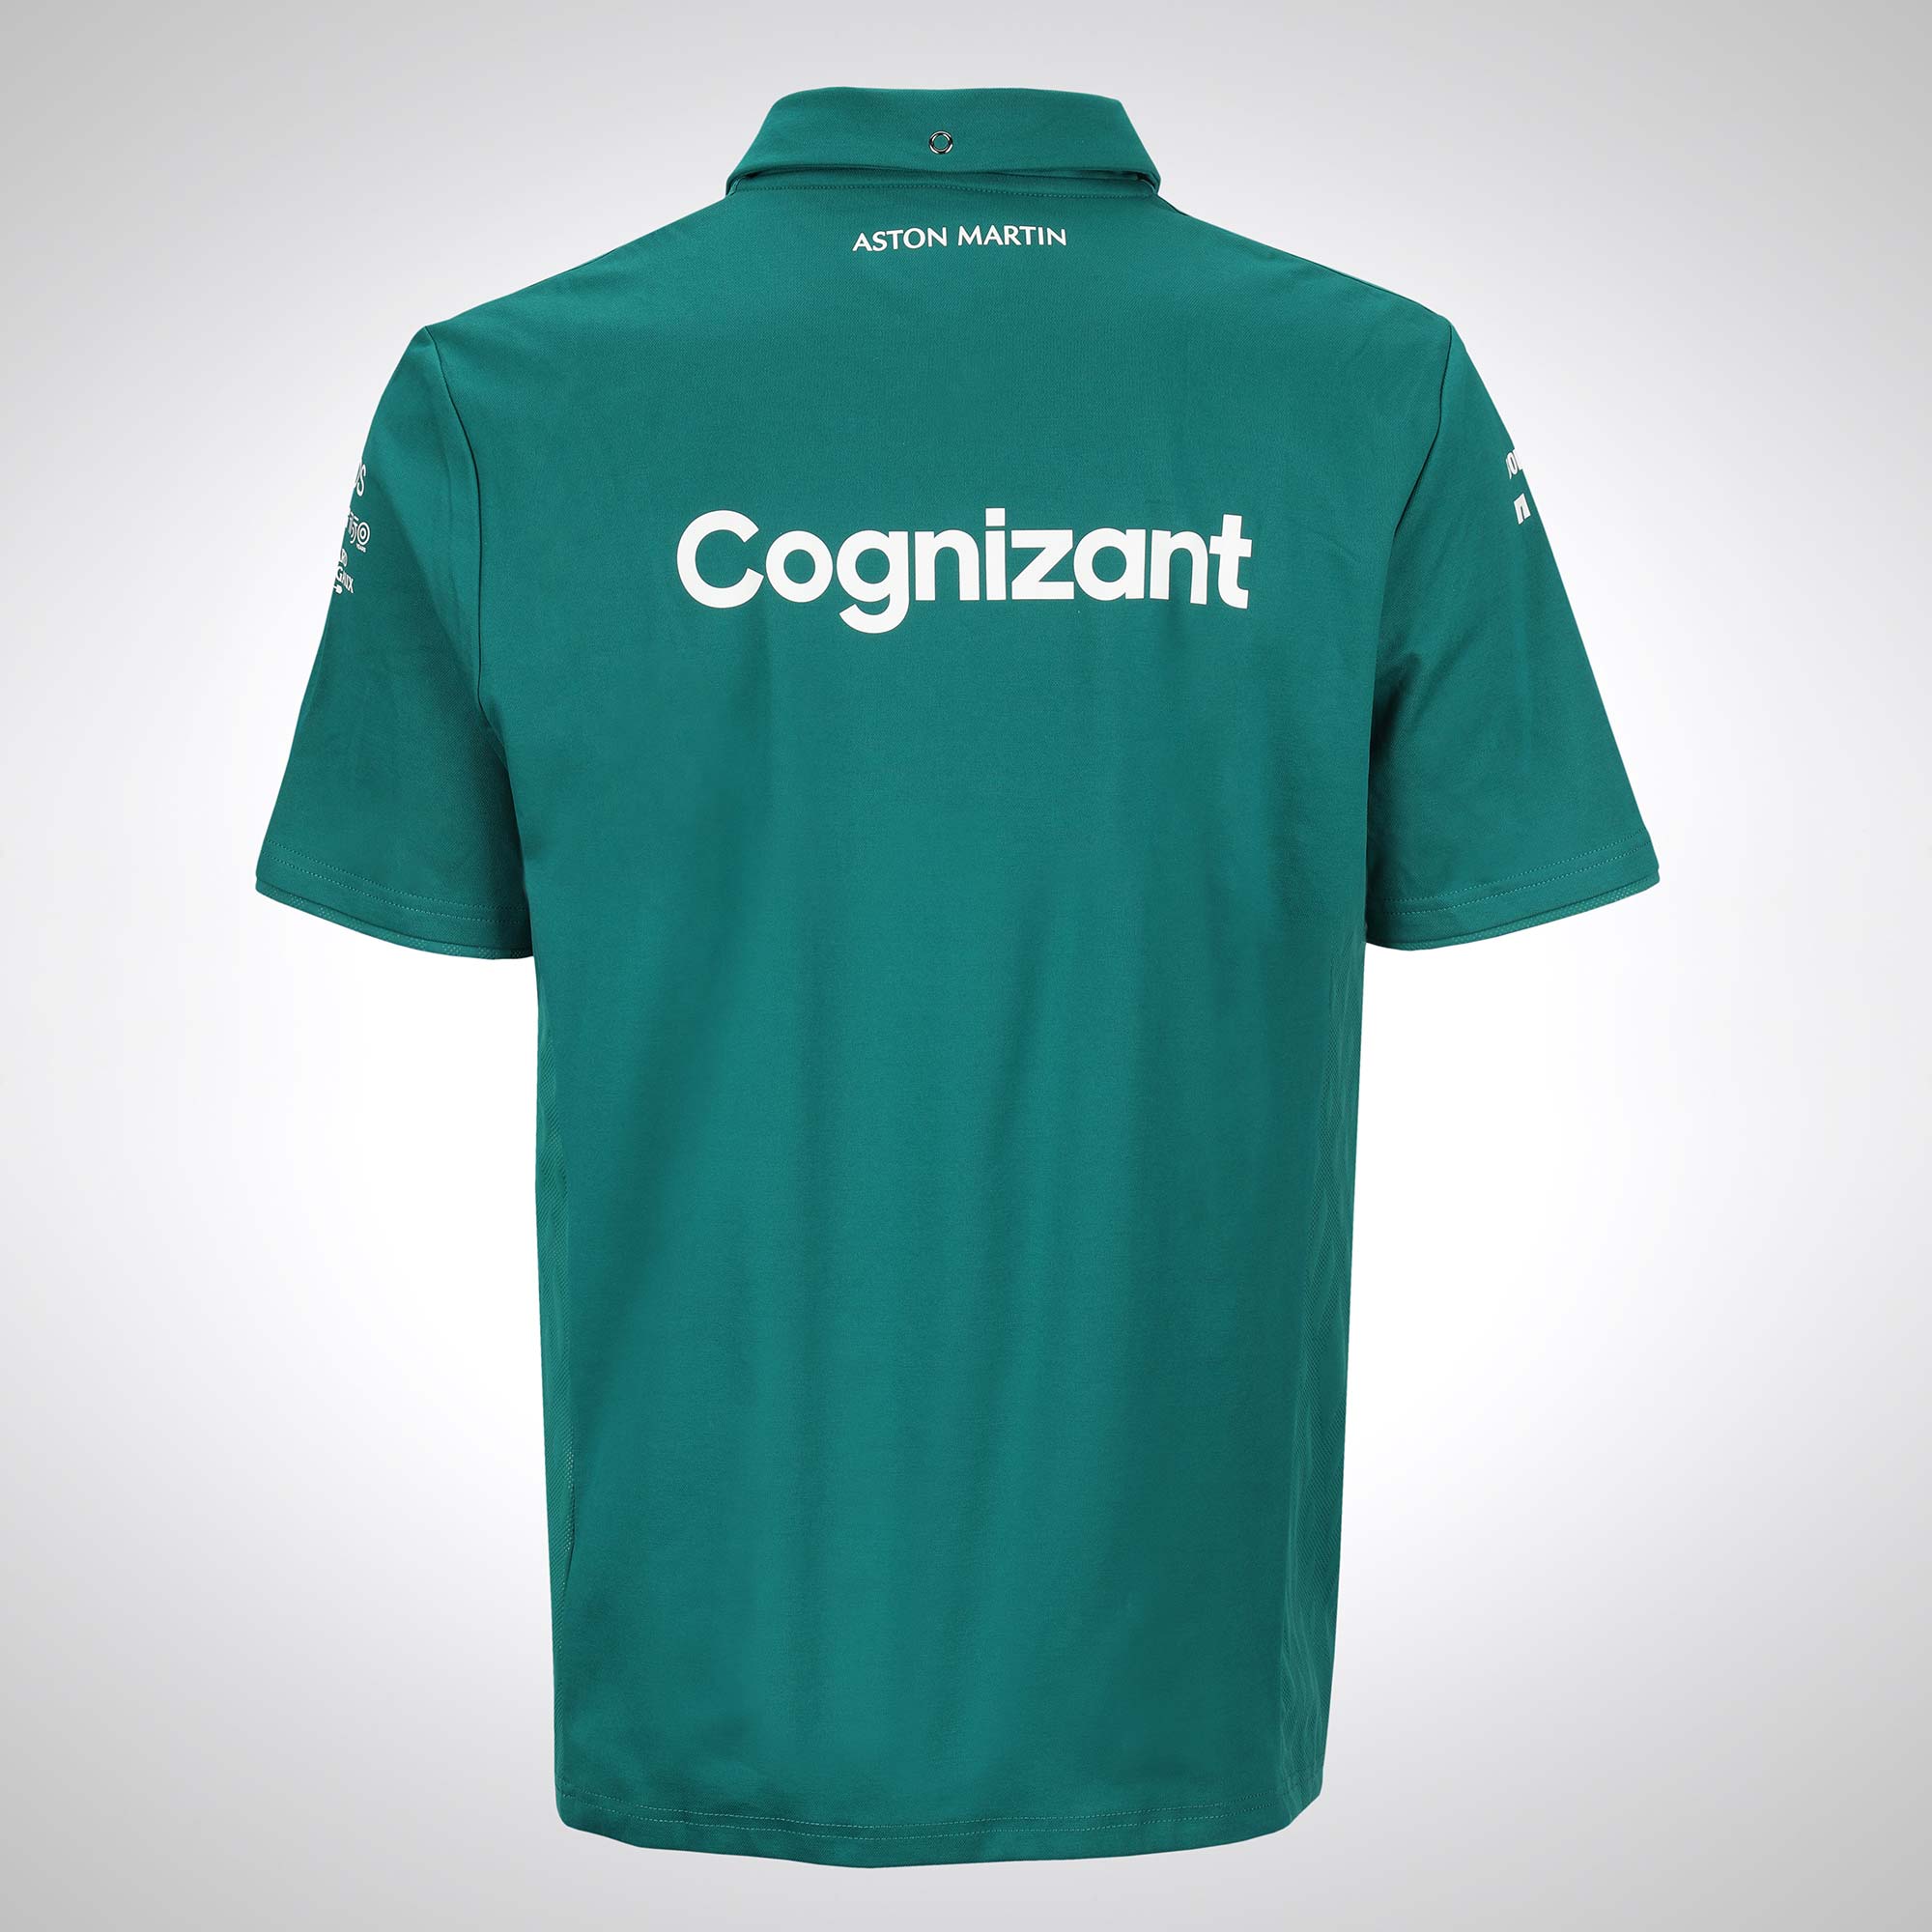 Lance Stroll 2022 Signed Aston Martin Aramco Cognizant F1 Team Polo Shirt